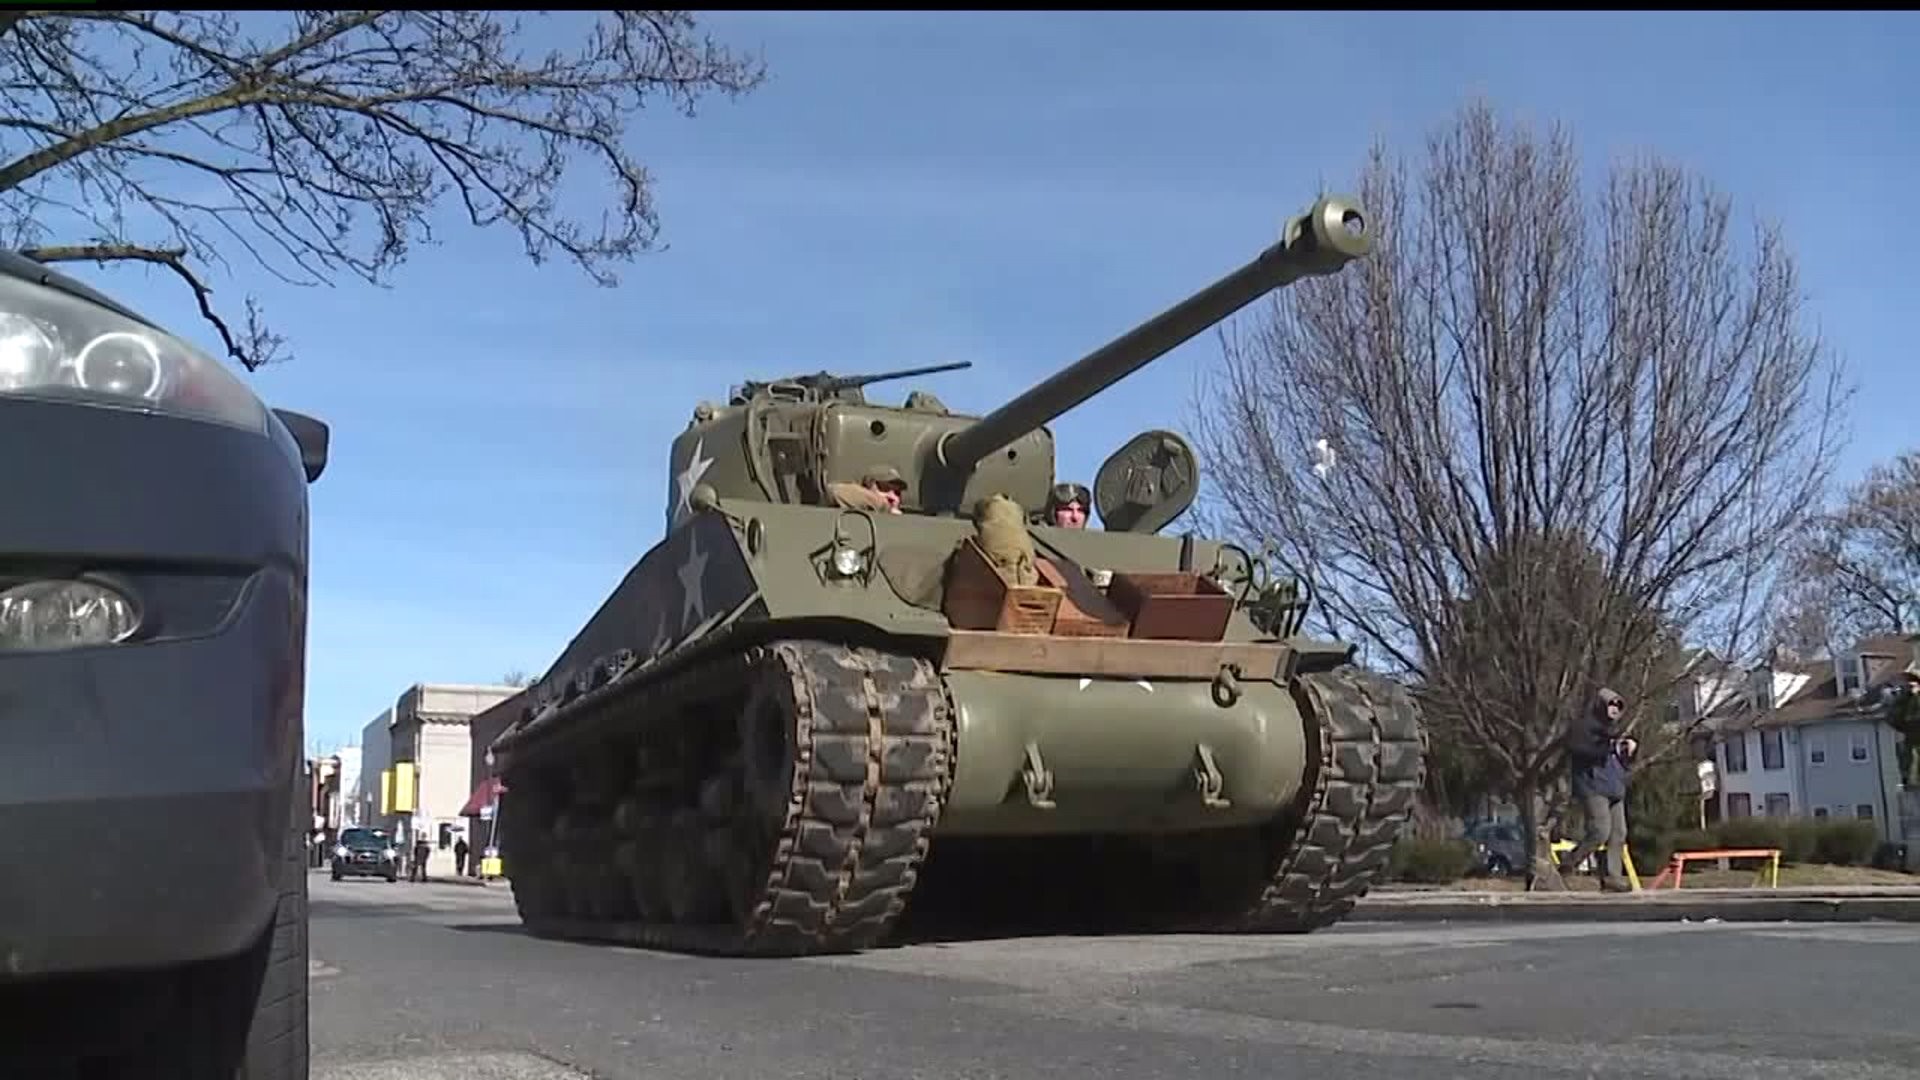 95-year-old former tank gunner honored